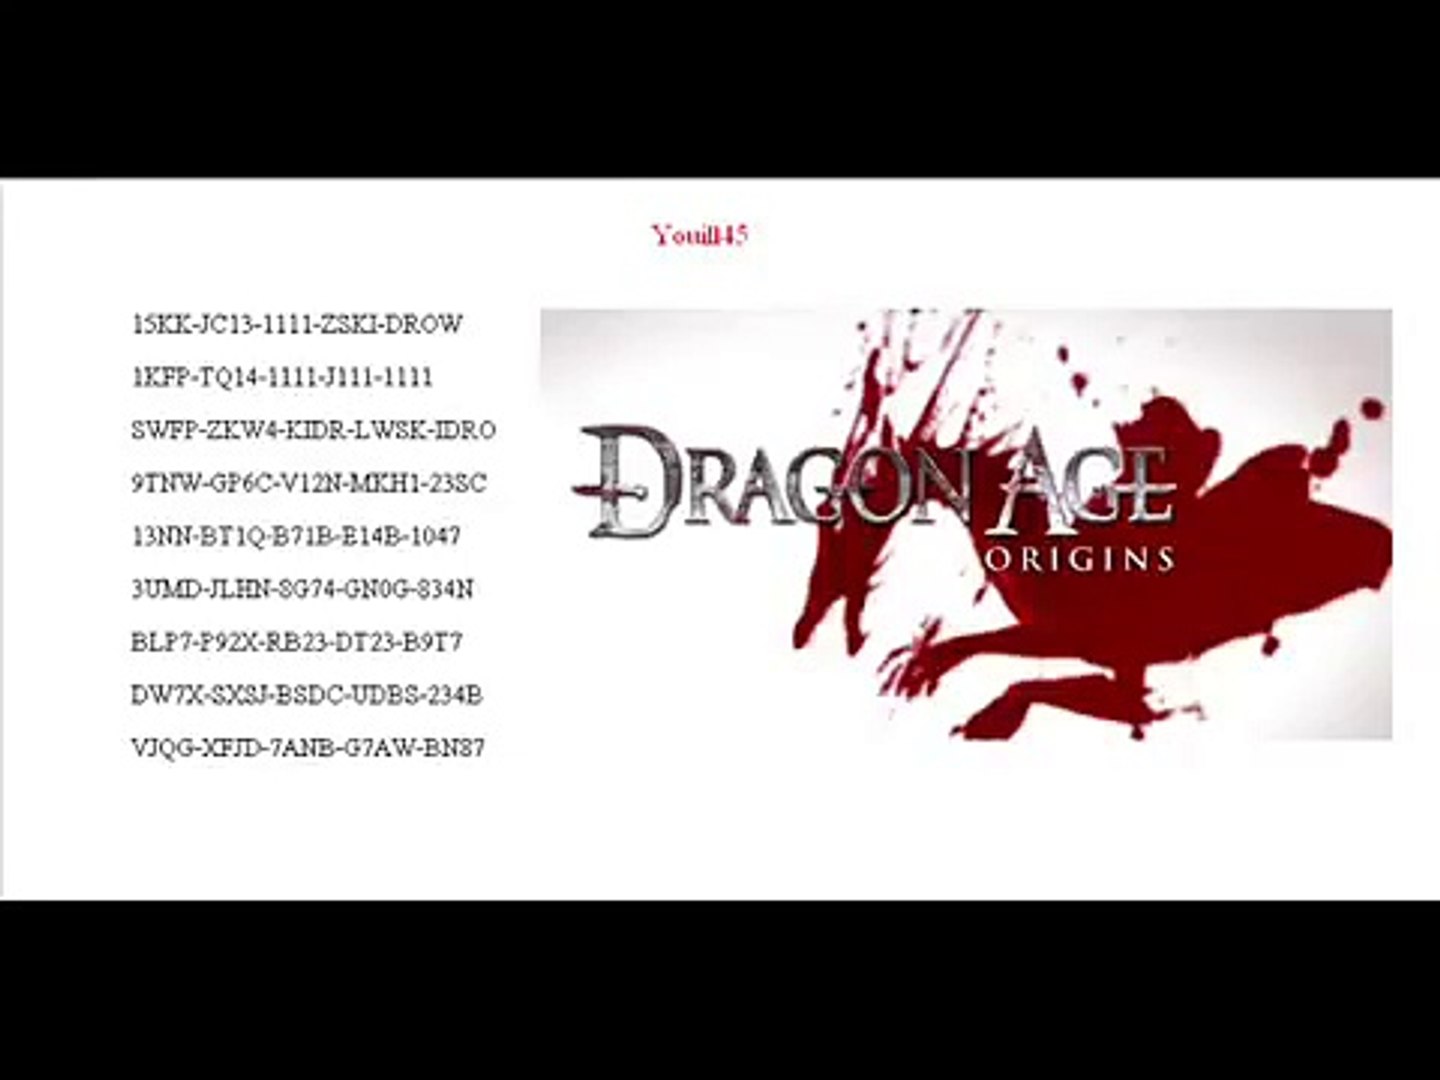 Dragon Age Origins (PC) CD key for Origin - price from $4.75